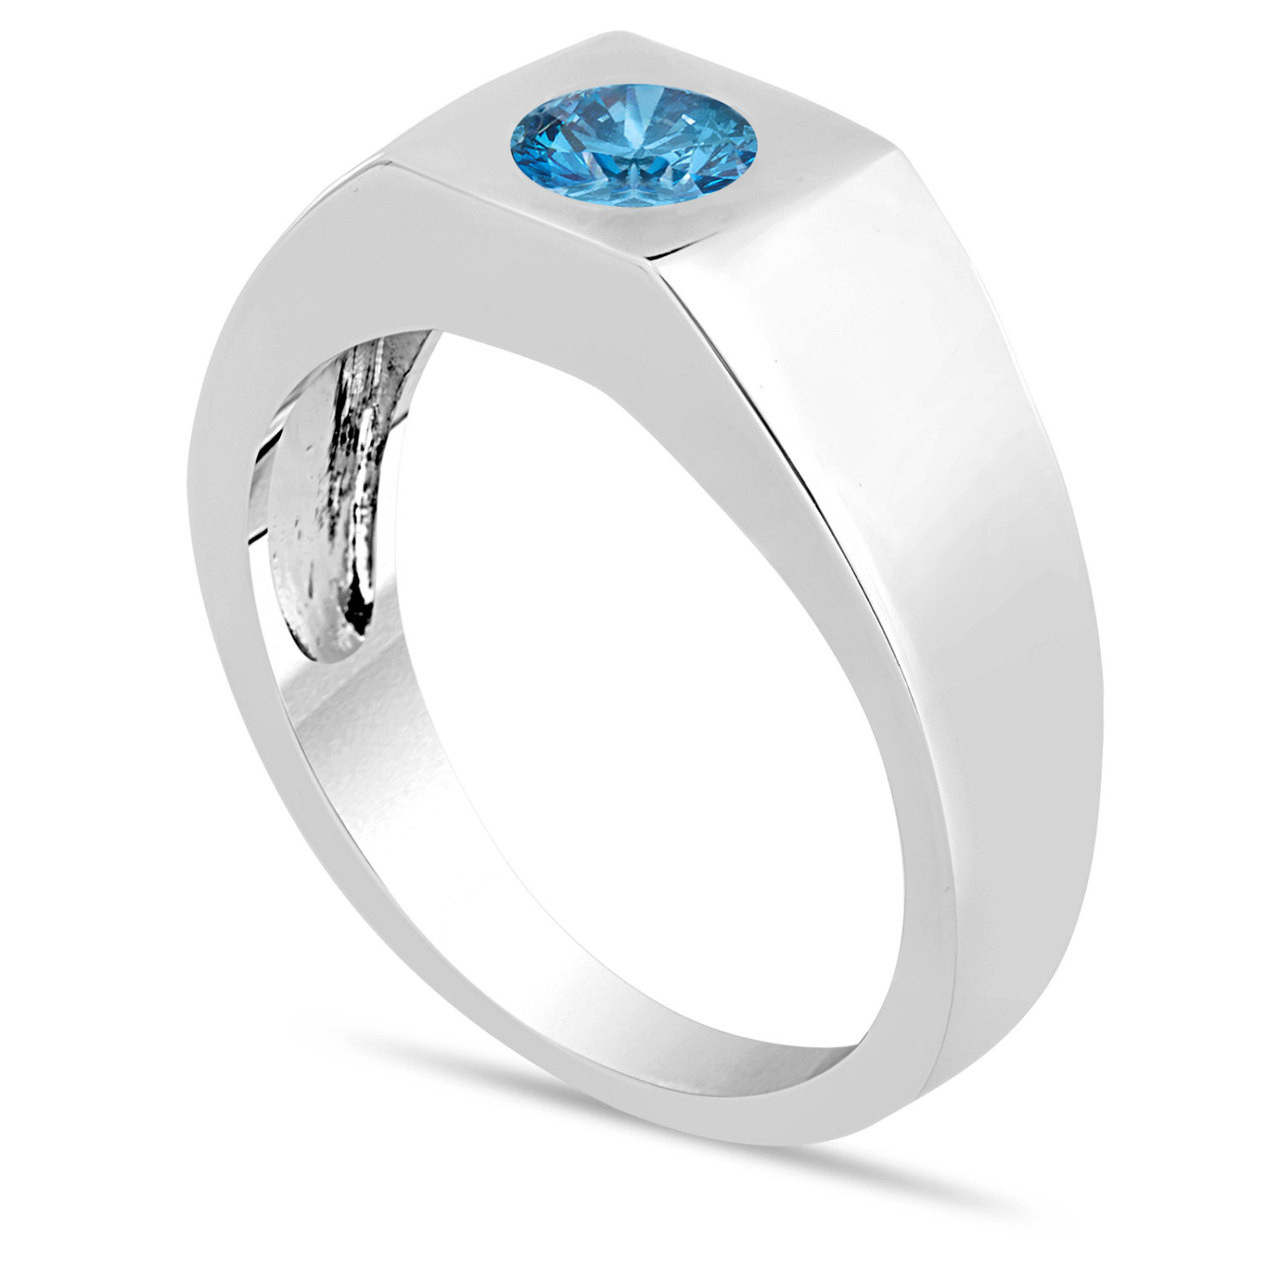 Customizable Yellow Sapphire (Pukhraj) Ring